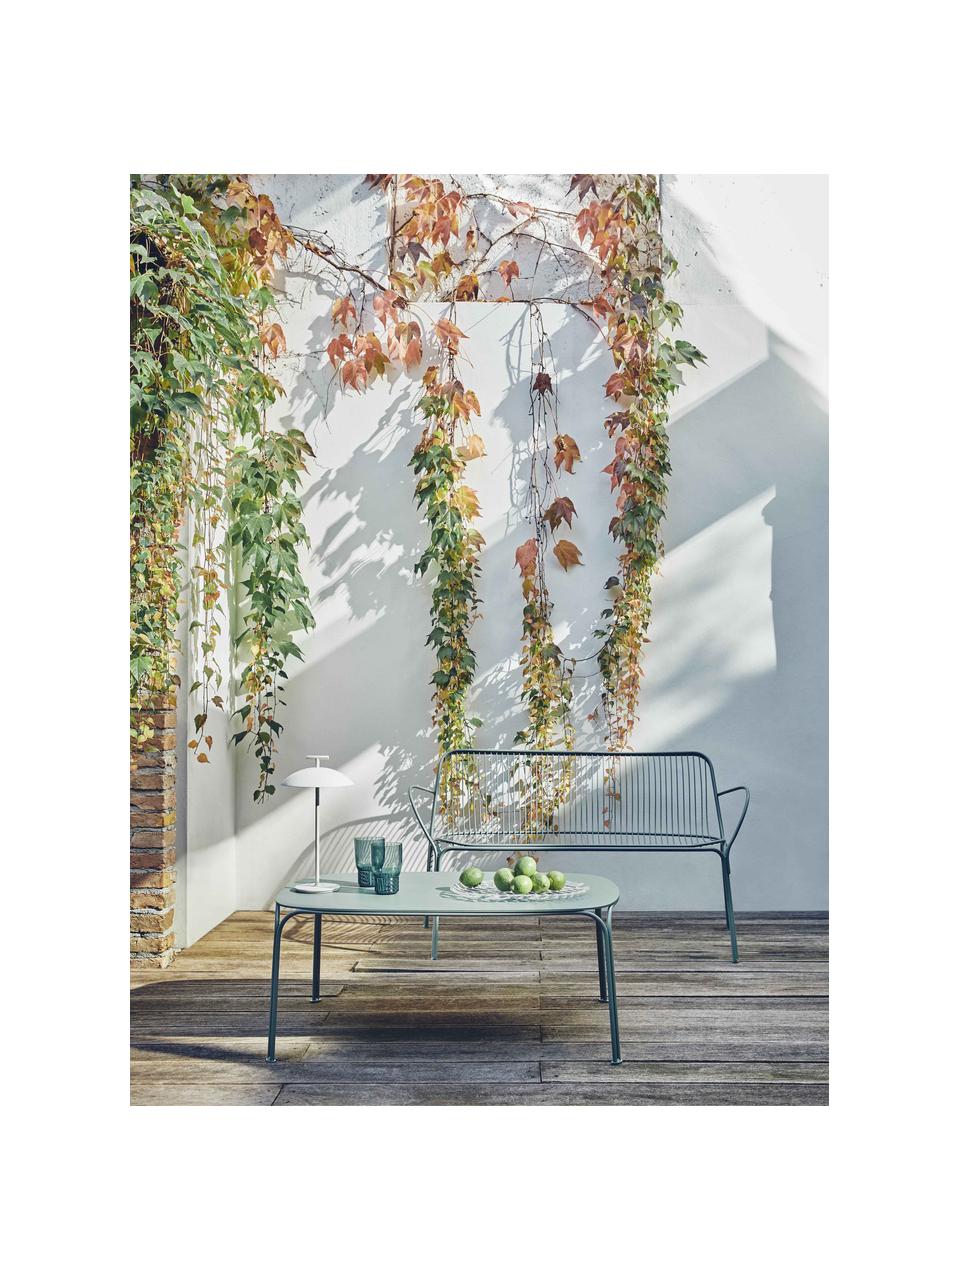 Tavolino da giardino Hiray, Acciaio zincato, laccato, Verde salvia, Larg. 90 x Prof. 59 cm